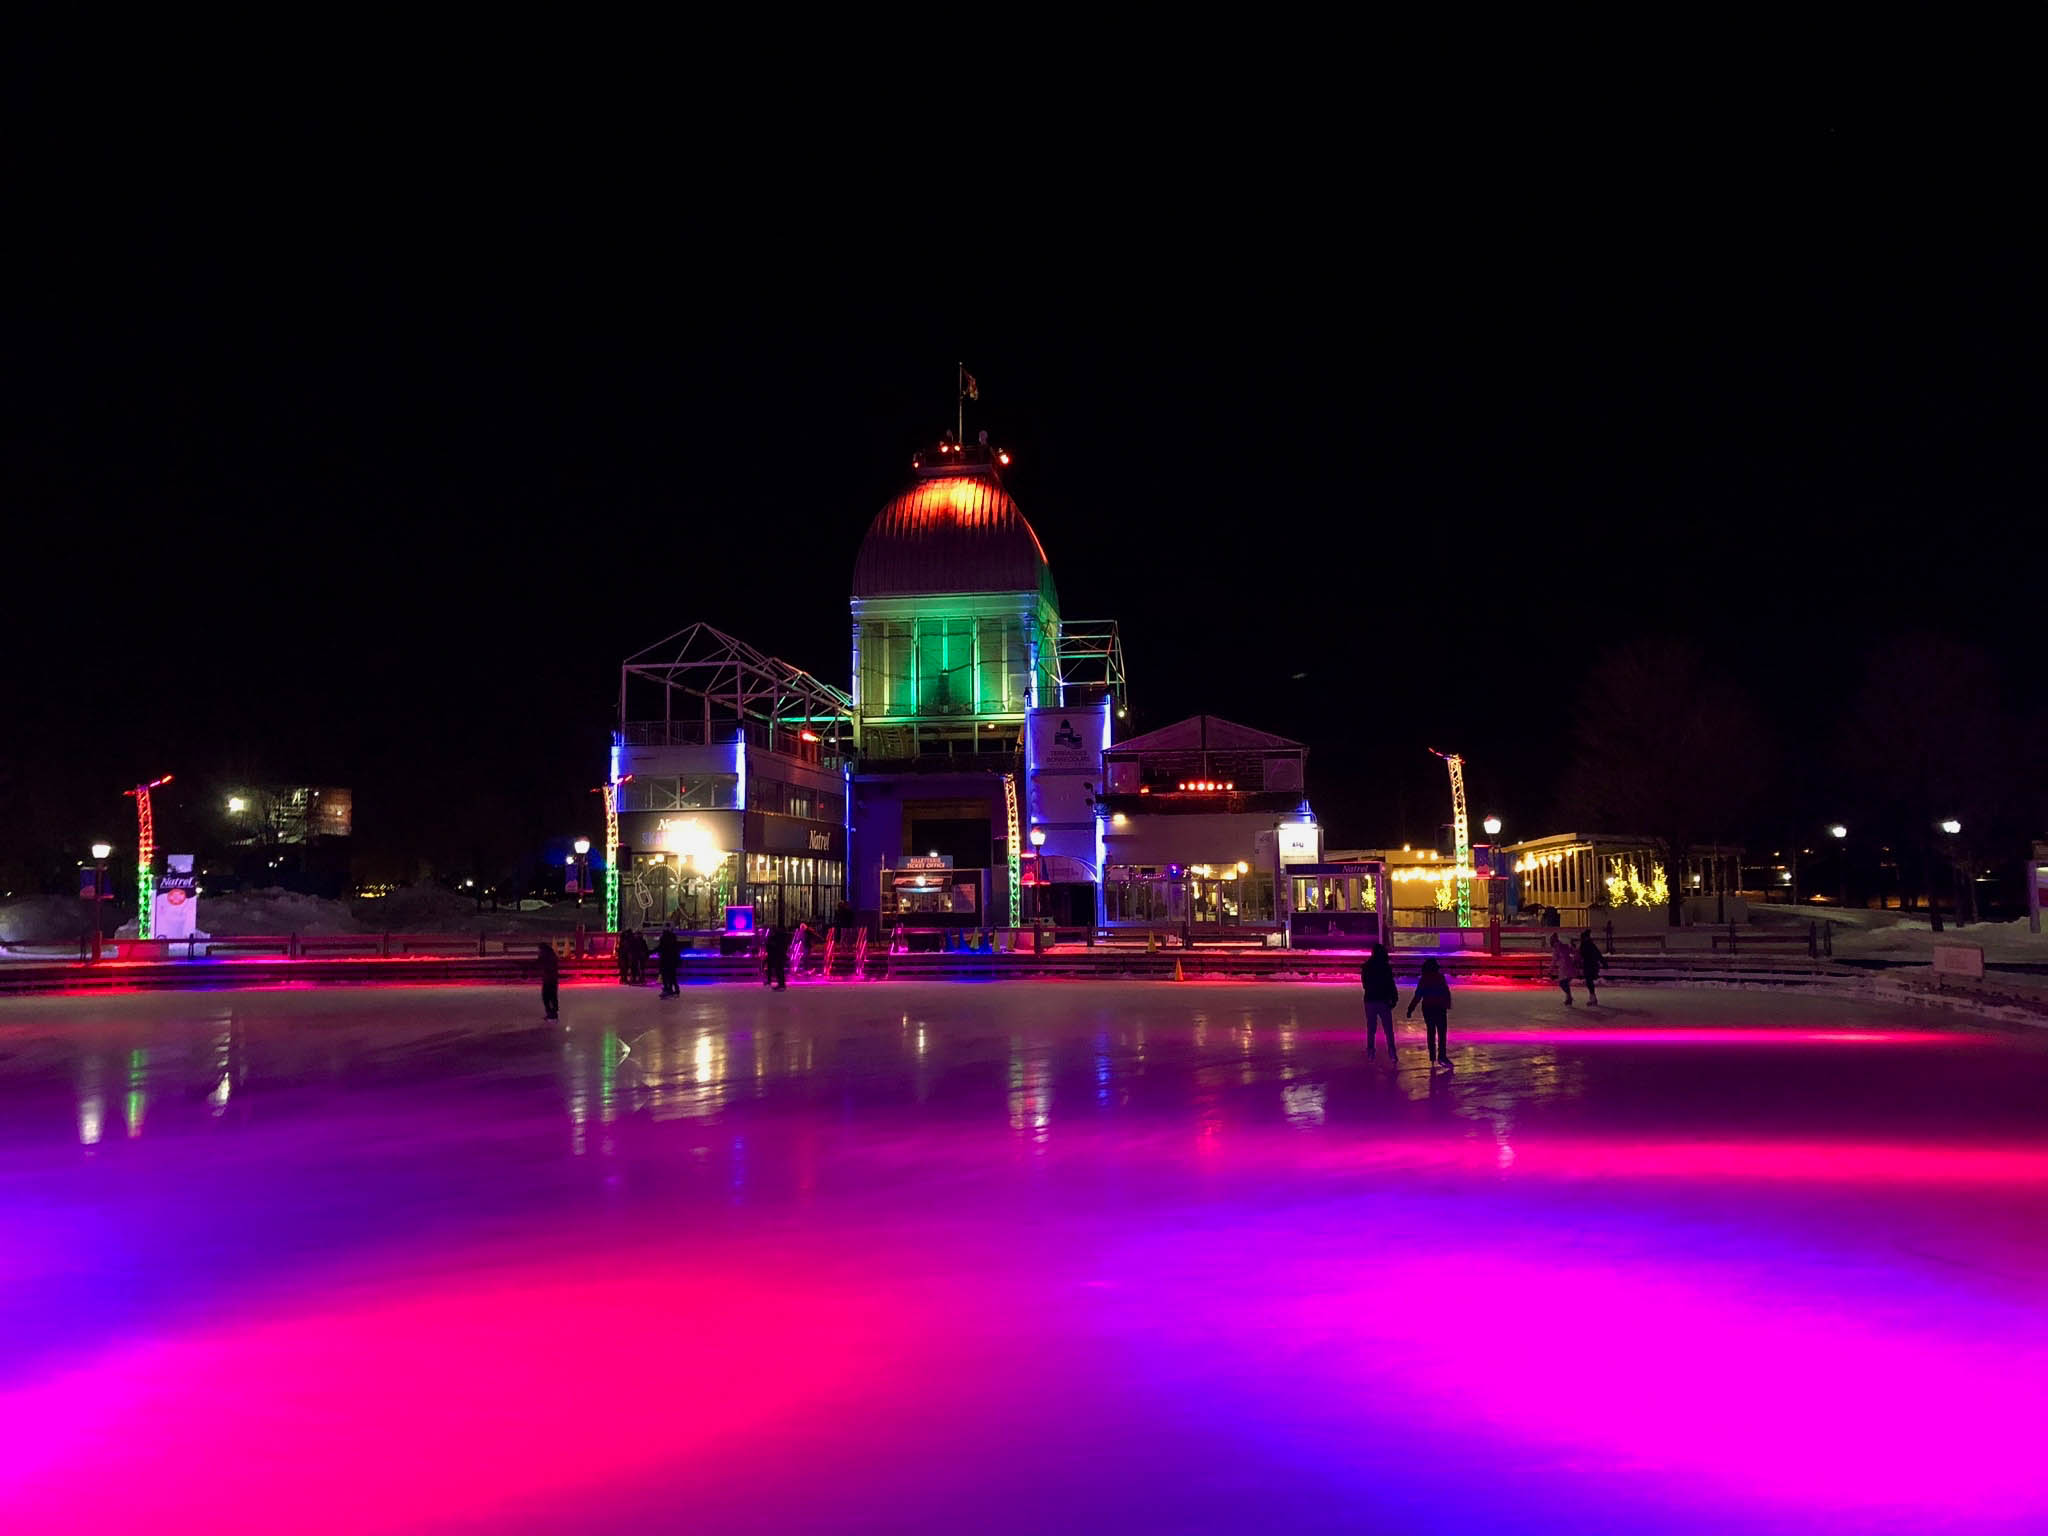 Ice skating rink at night in Montreal